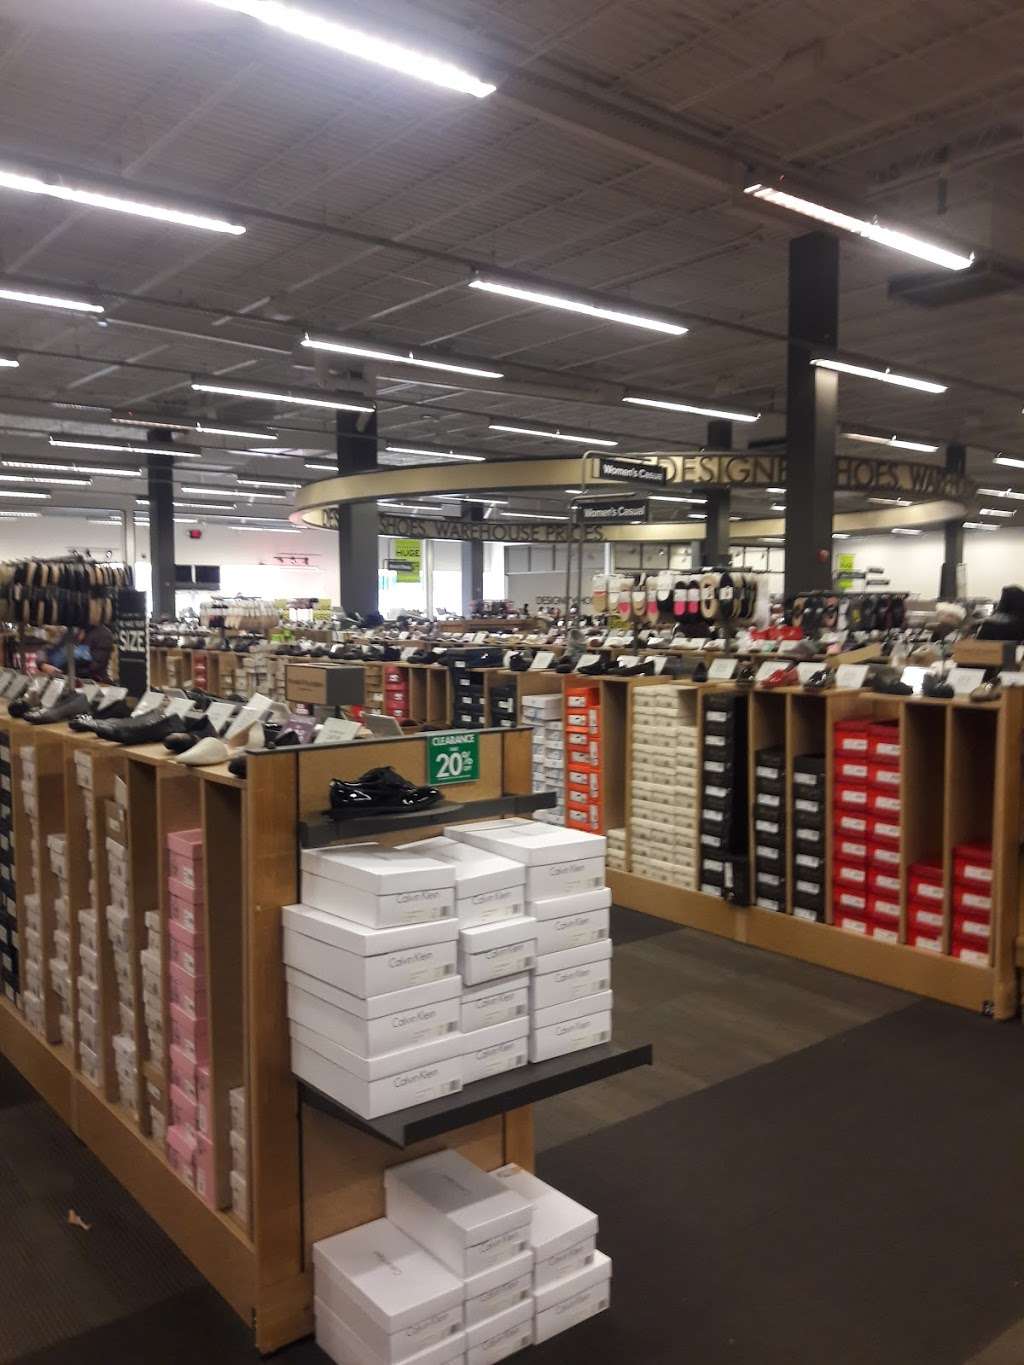 DSW Designer Shoe Warehouse | 113 Mill Plain Rd, Danbury, CT 06811, USA | Phone: (203) 794-0074